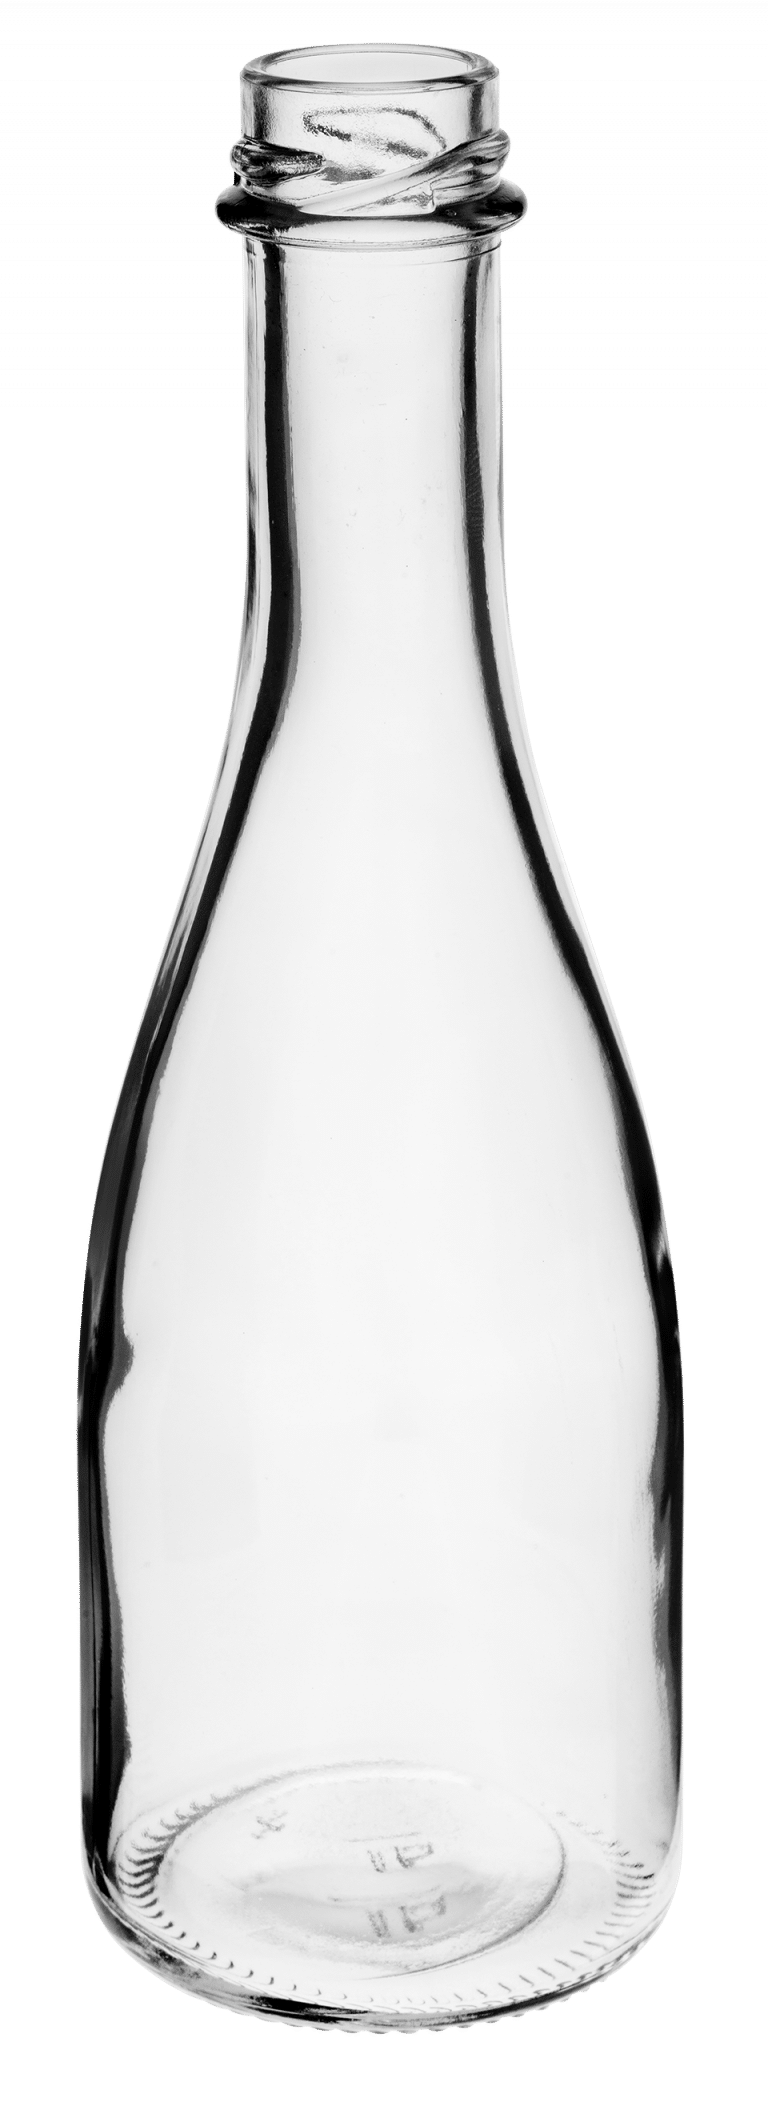 Sauce bottle round 162ml Snap & screw 24mm glass white flint